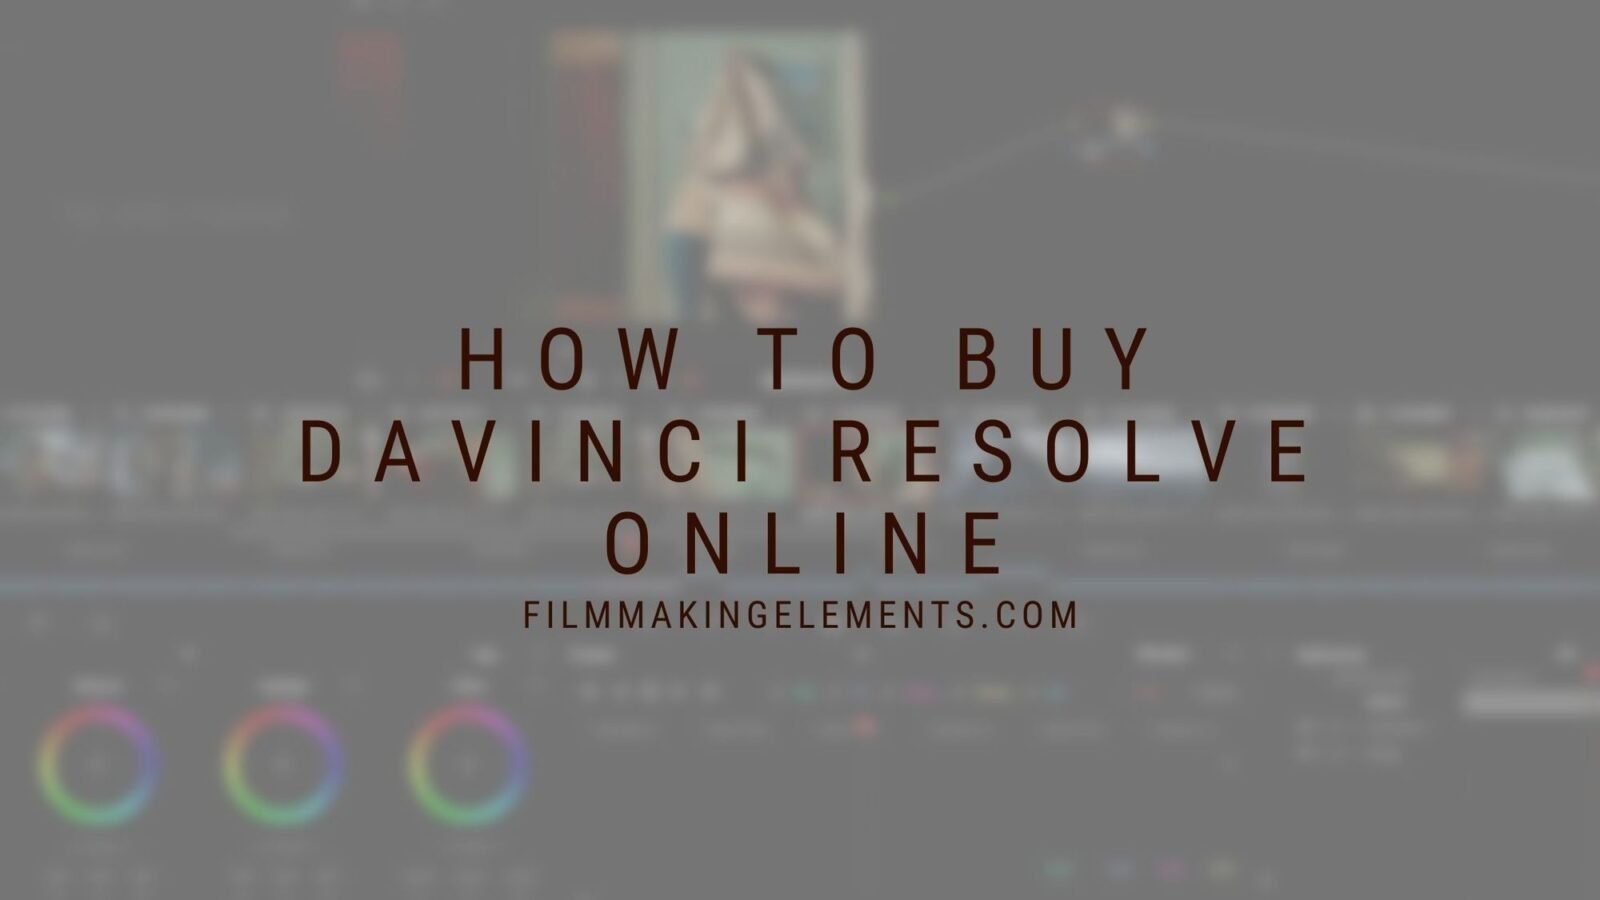 How To Buy Davinci Resolve Online (In 1 Minute)